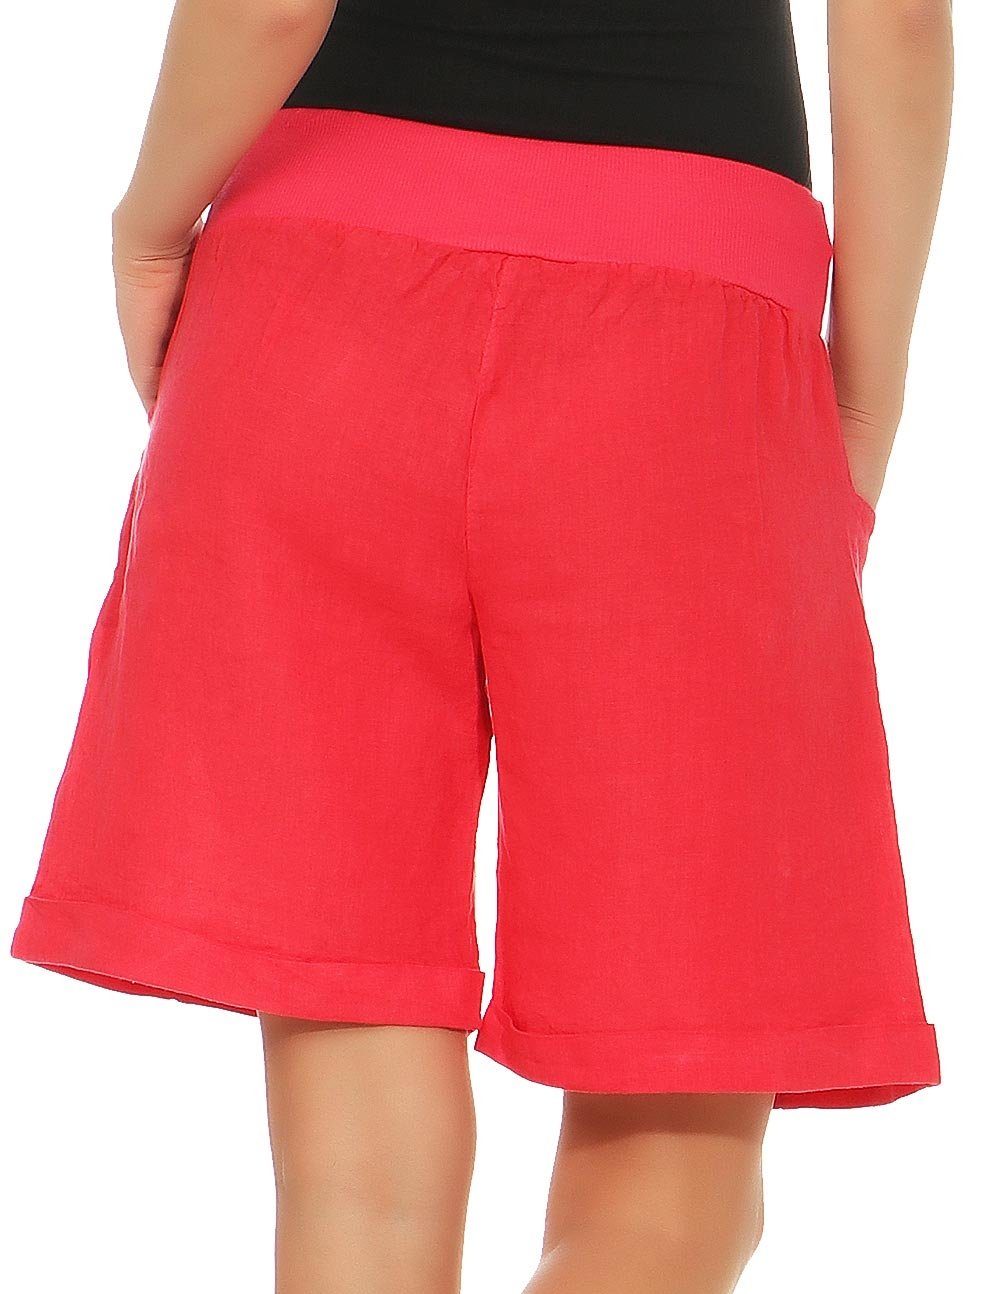 malito more than fashion pink aus Shorts Bermuda Leinenhose Leinen 8024